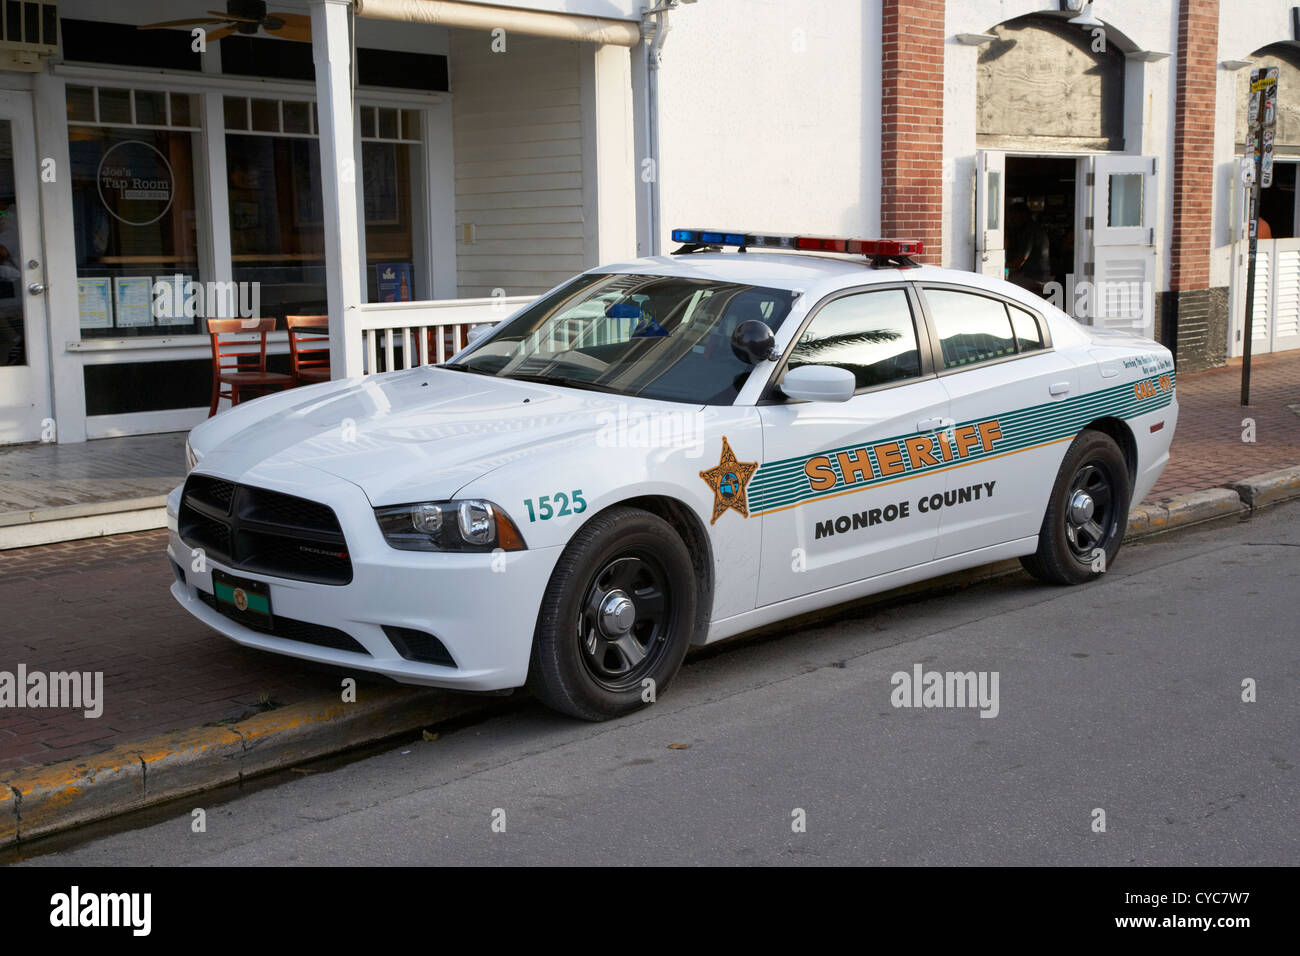 monroe county sheriff patrol squad car key west florida usa Stock Photo